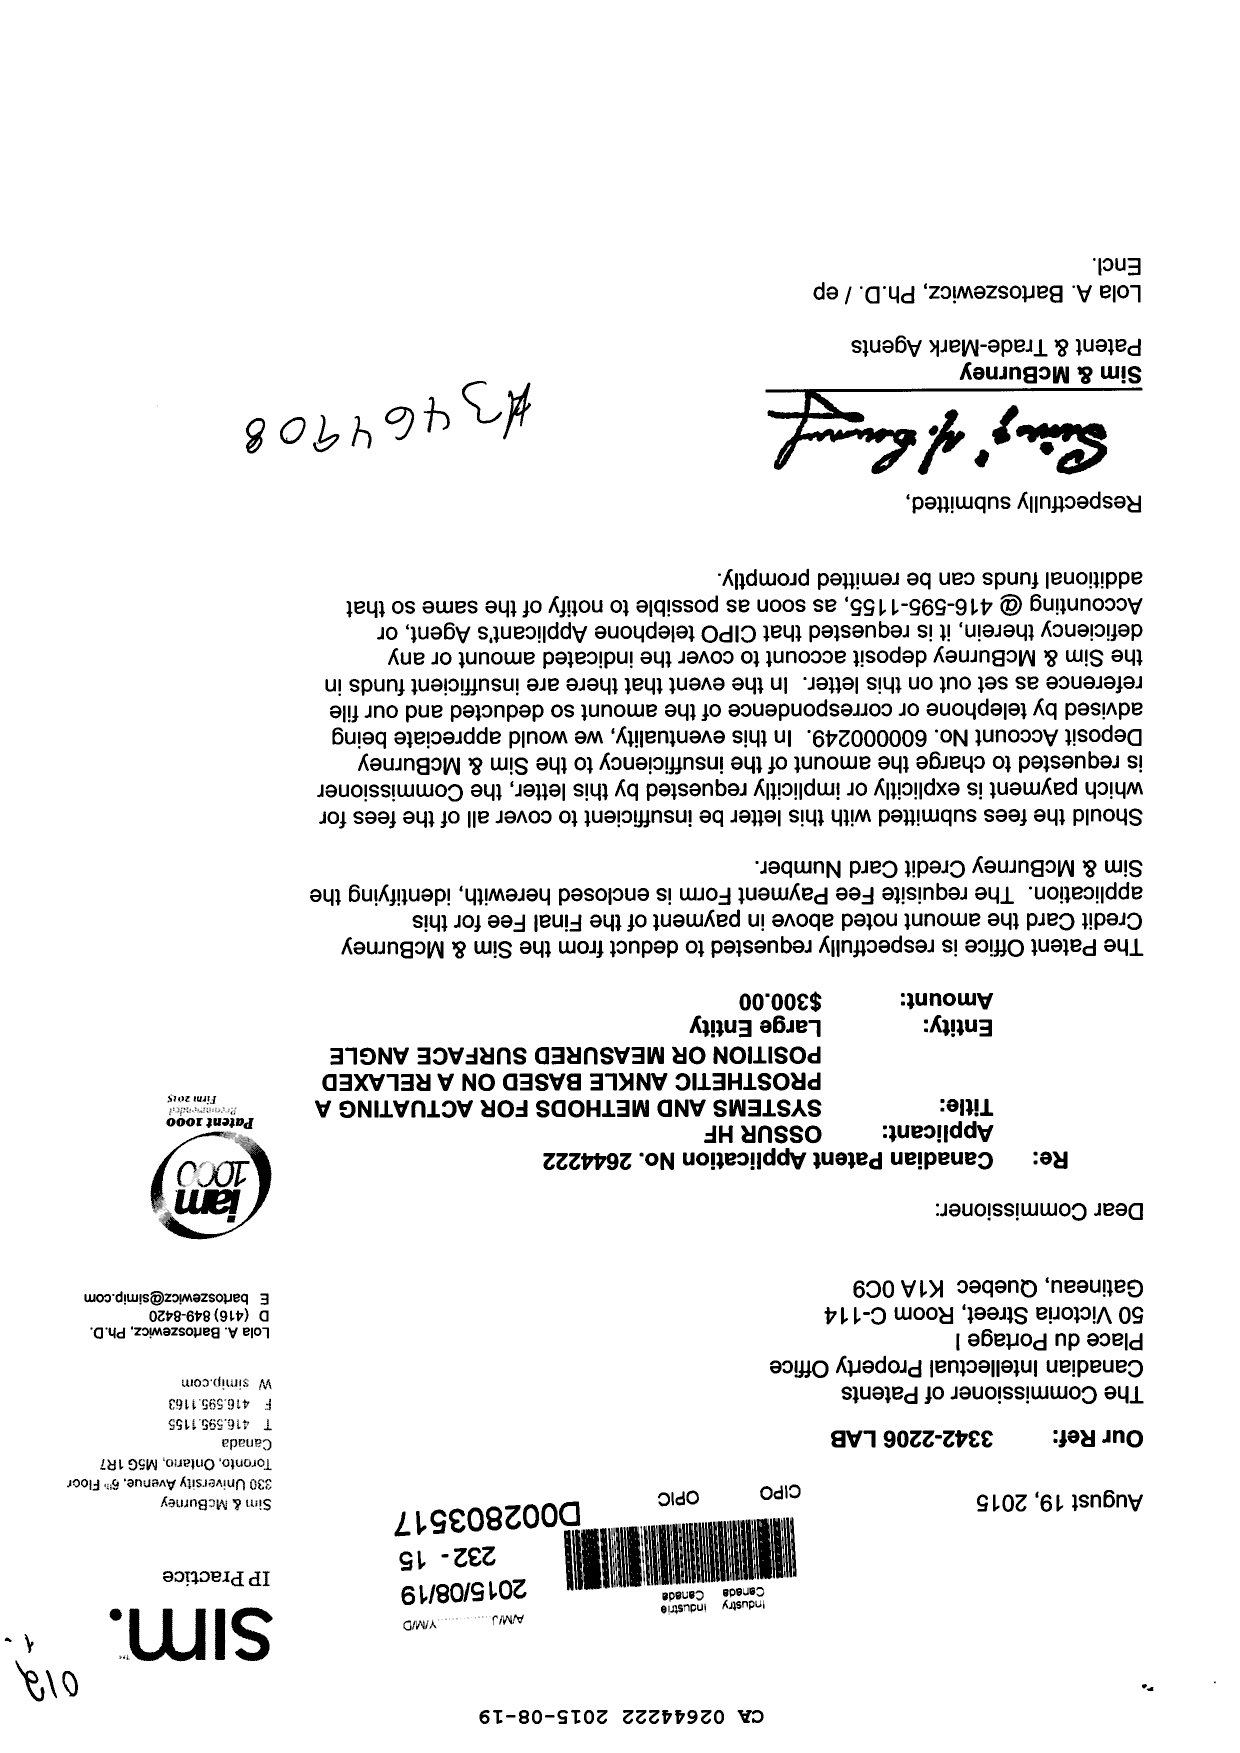 Canadian Patent Document 2644222. Correspondence 20141219. Image 1 of 1